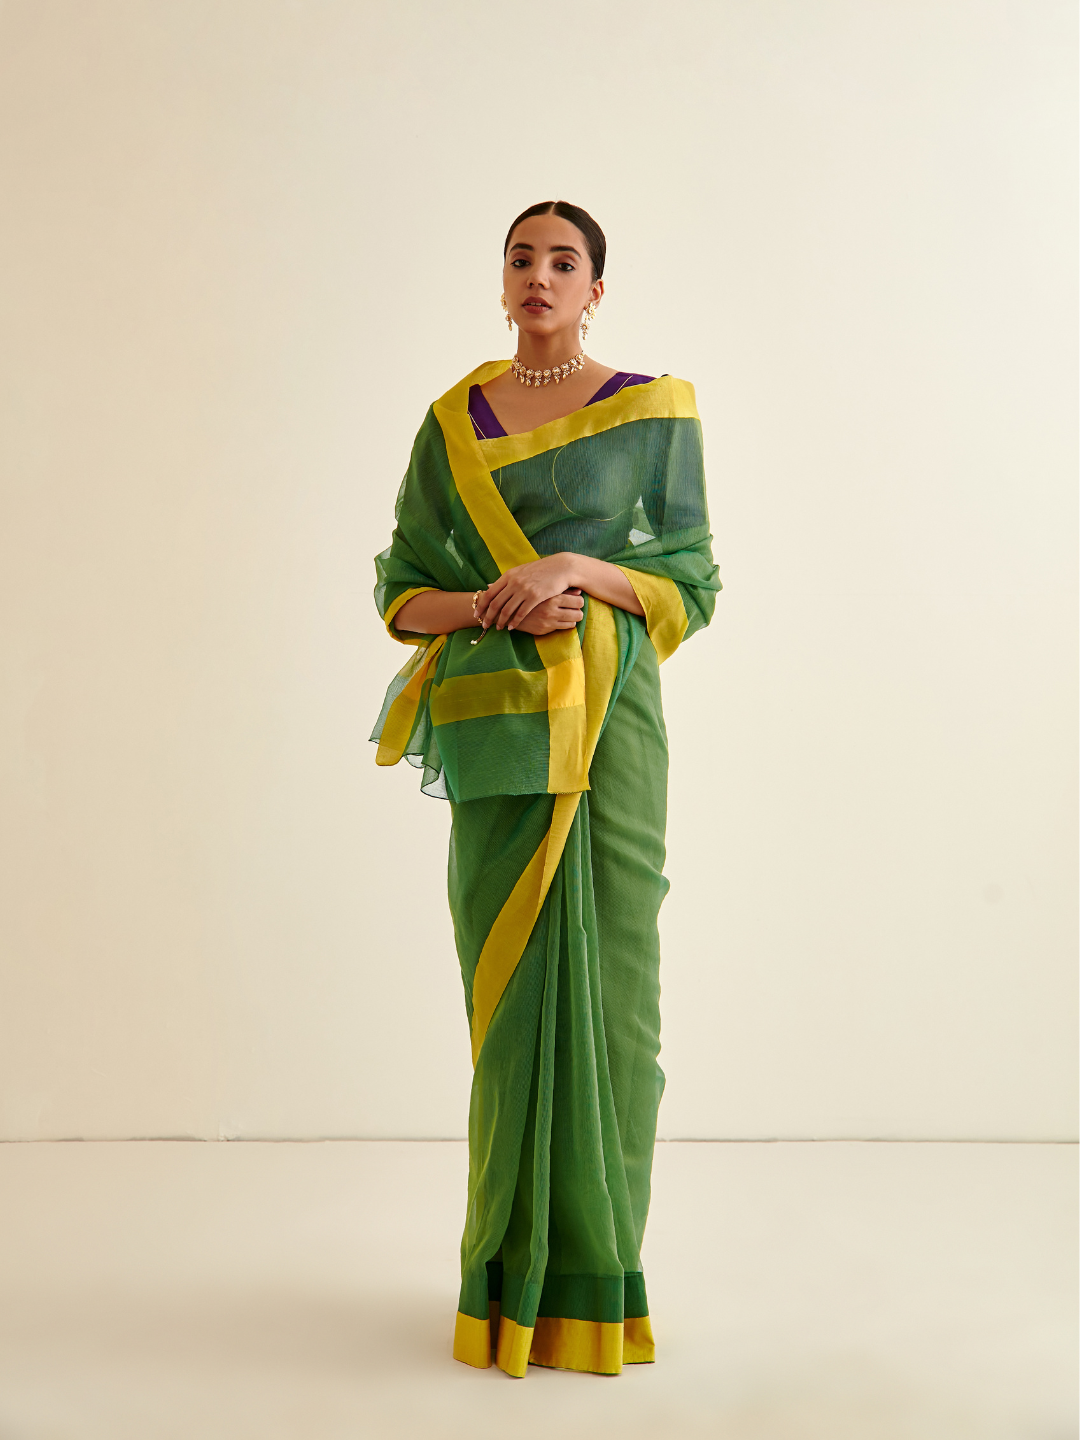 Banarasi woven sari with contrasting border- Hunter Green